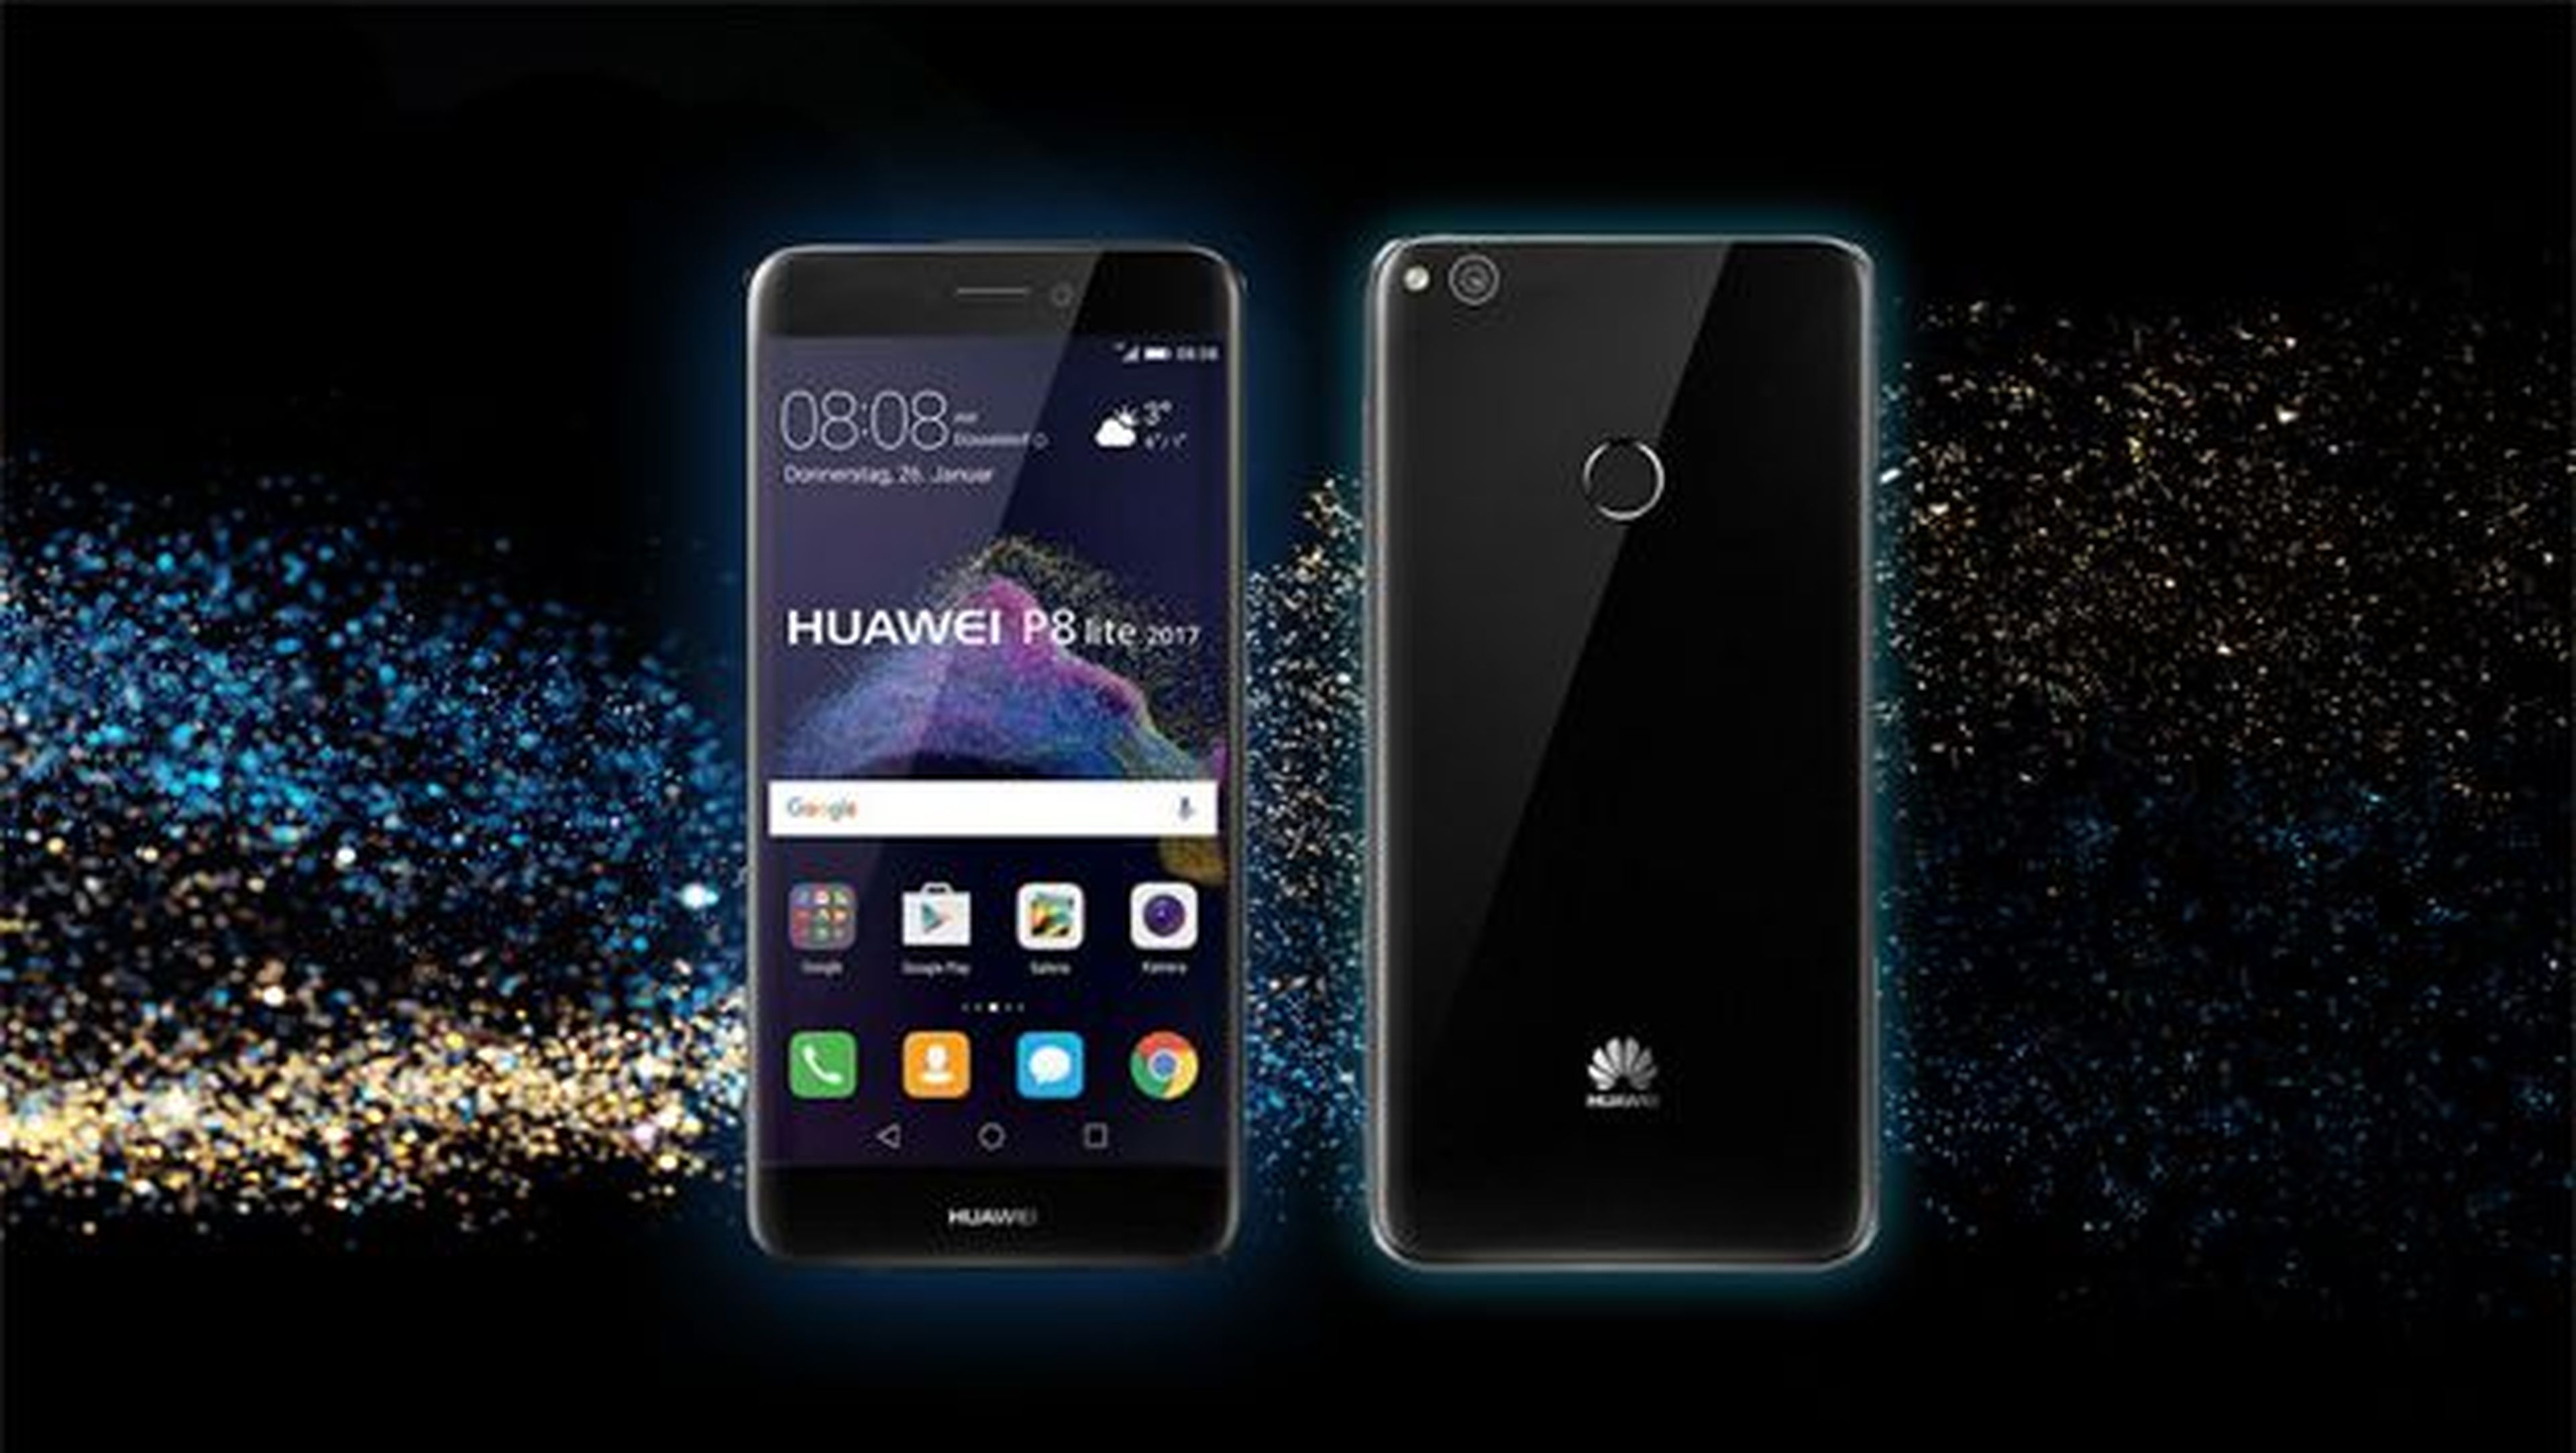 Huawei P8 Lite 2017.